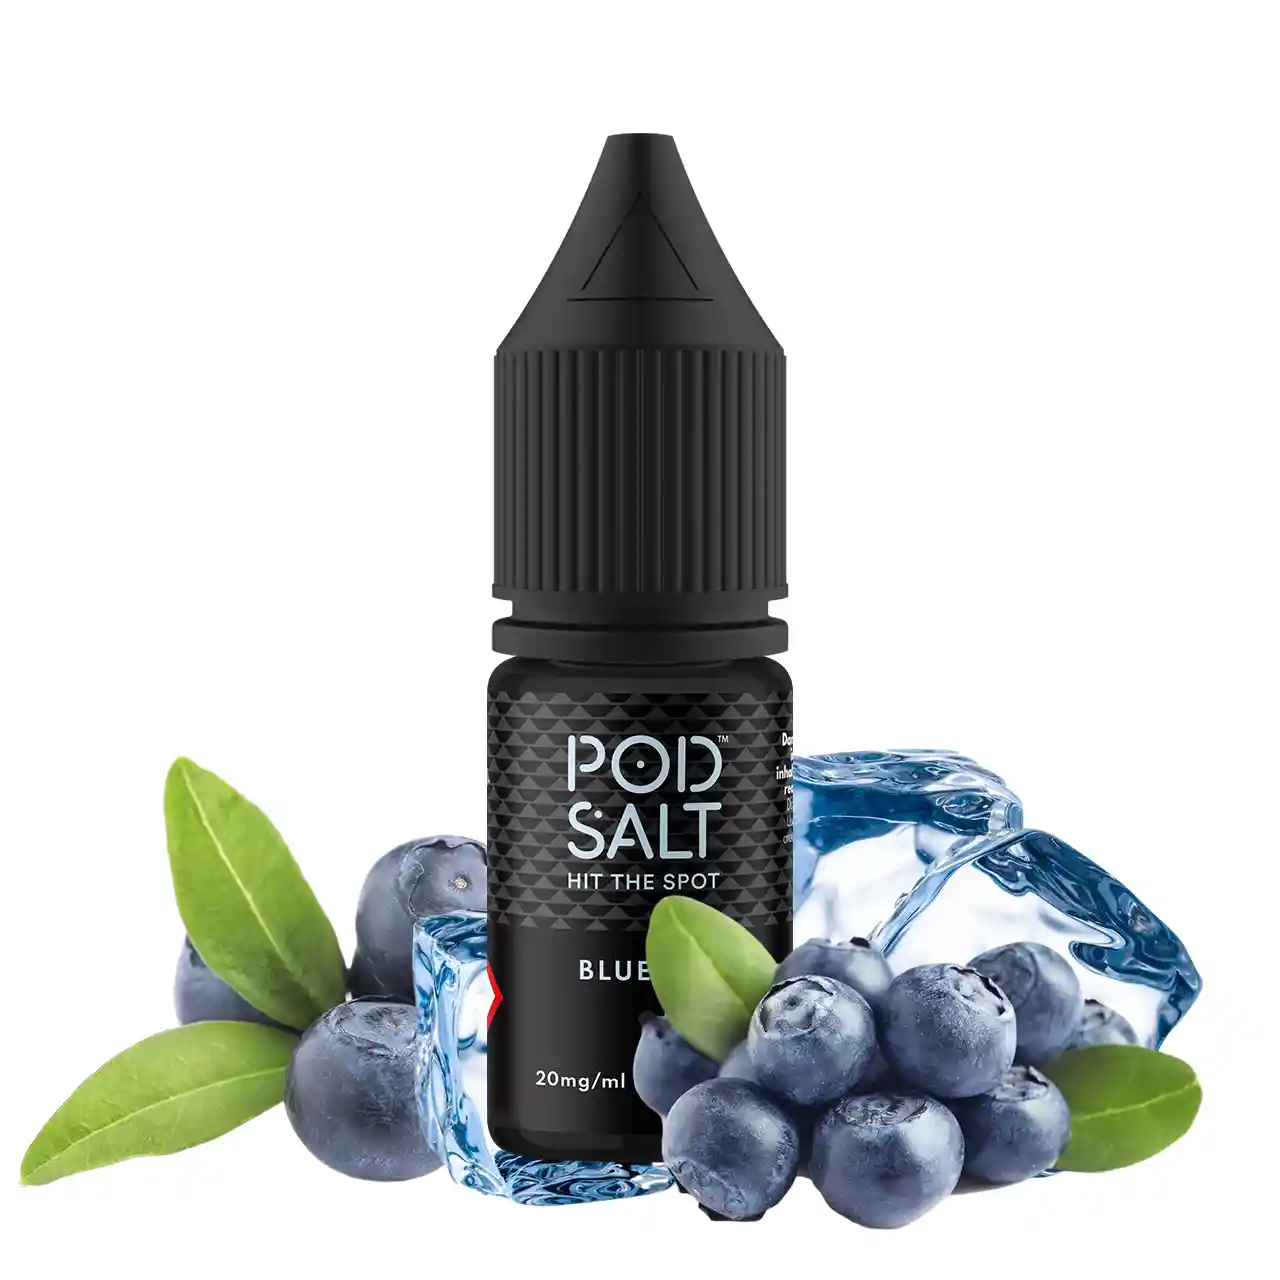 Pod Salt Blue Ice Nic Salt Liquid